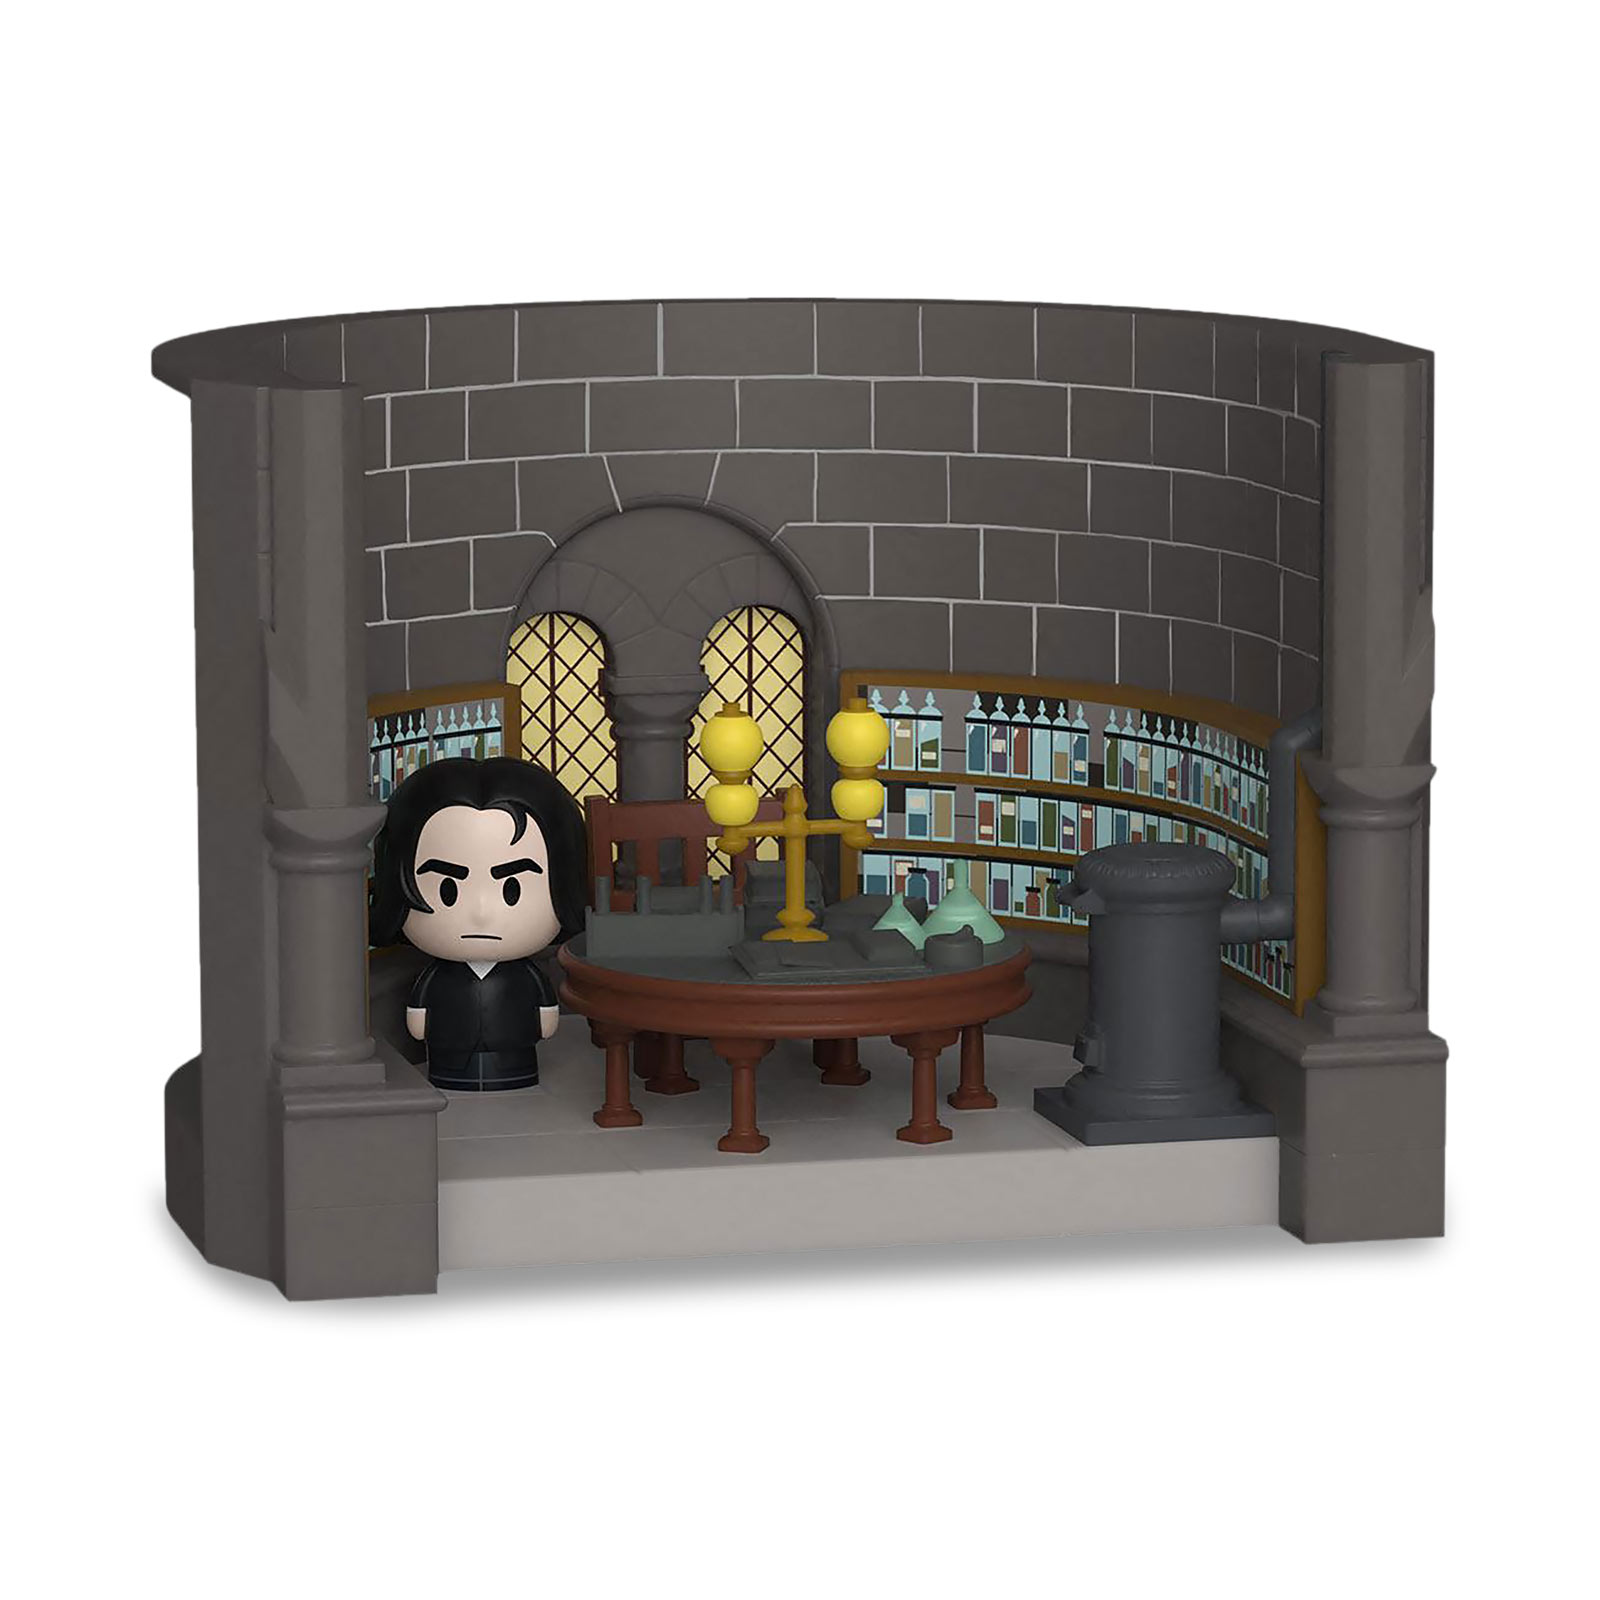 Professor Snape Potion Class Funko Pop Mini Moments Figure - Harry Potter